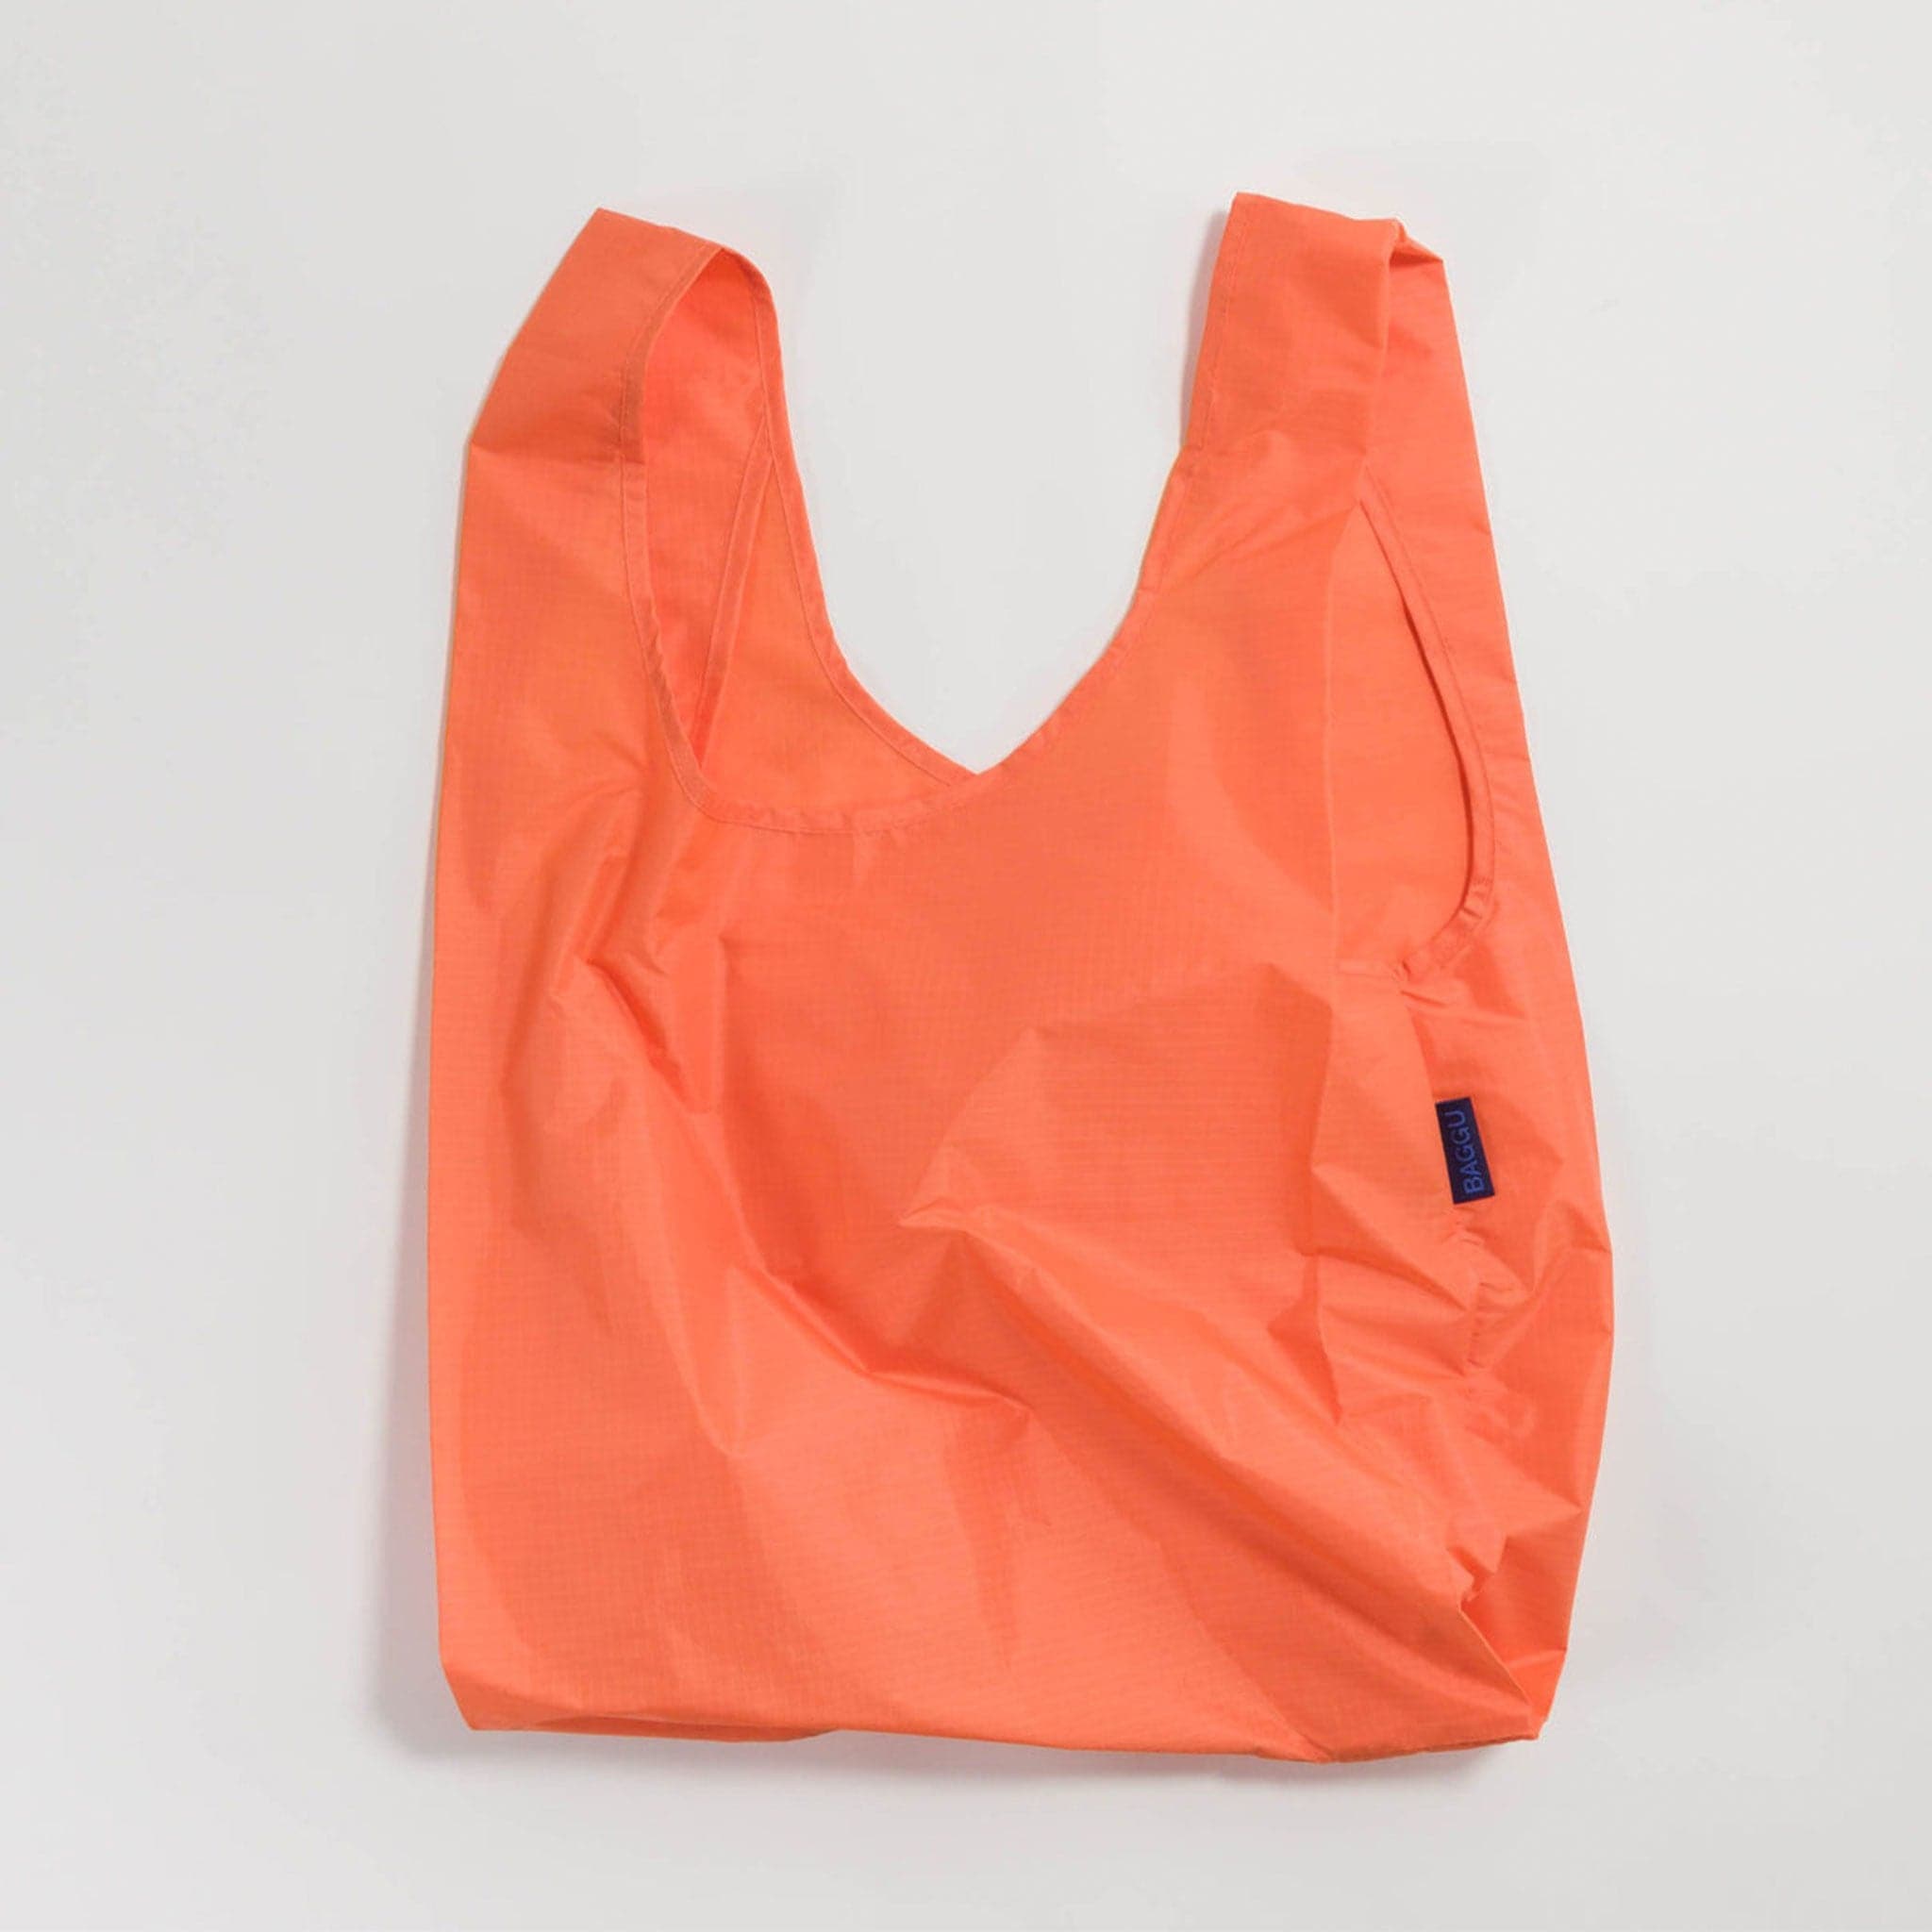 A neon salmon colored reusable bag.